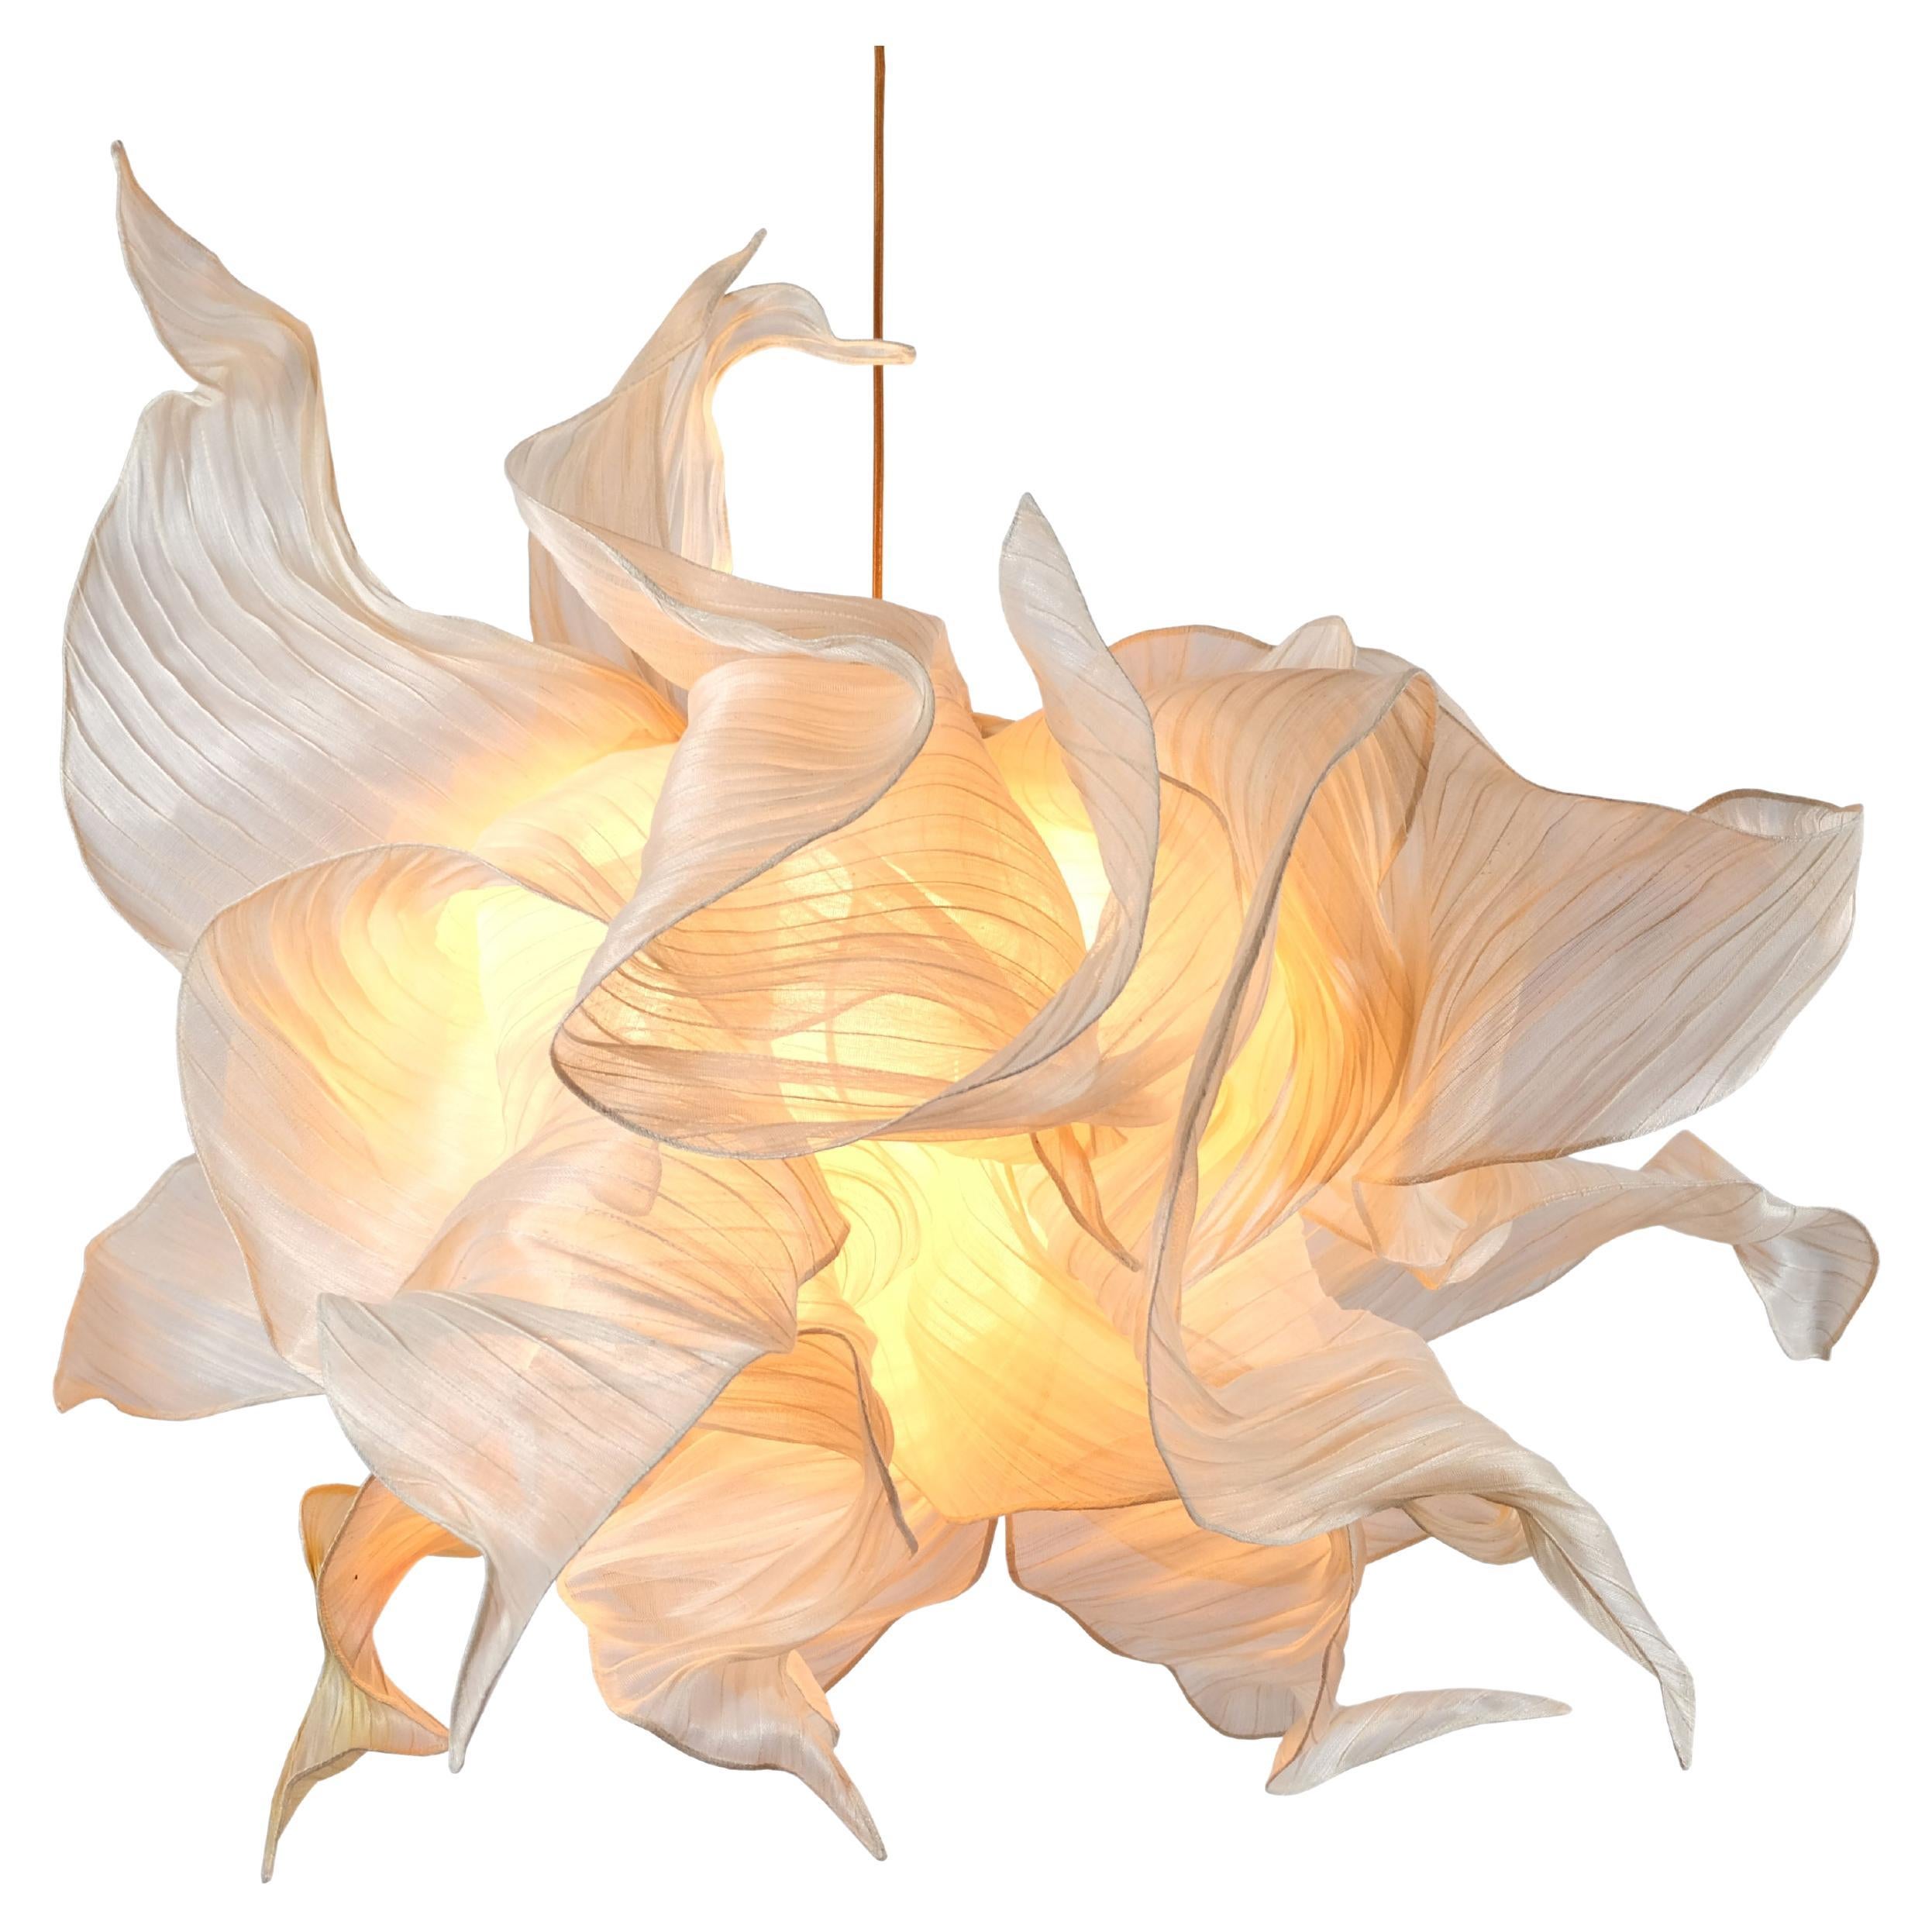 The Moderns Moderns Sculptural Fabric Suspension Light from Costantini x Studio Mirei, Supernova (en anglais uniquement) en vente